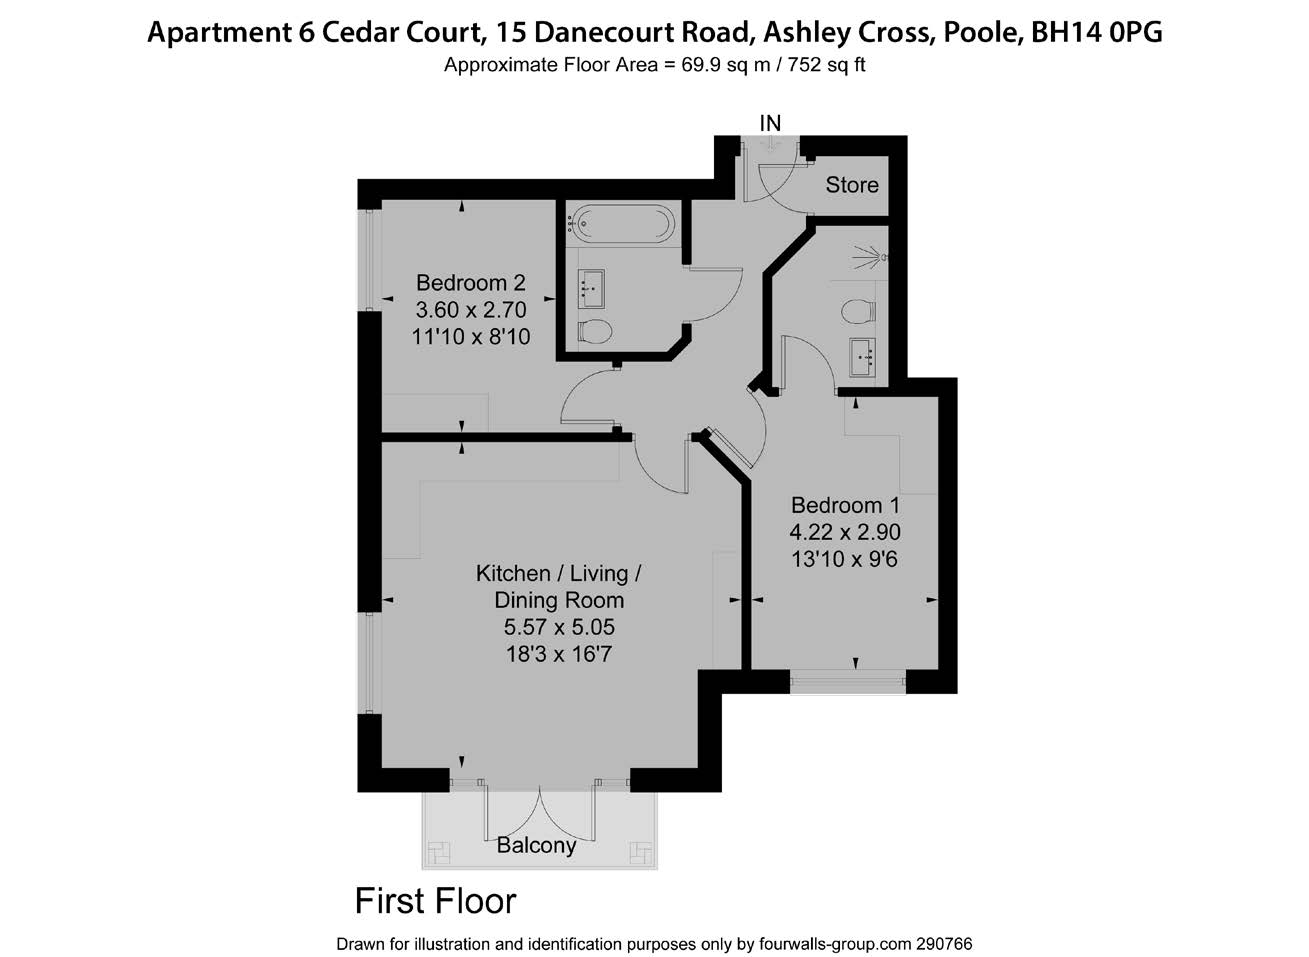 Apartment 6 Cedar Court floor plan